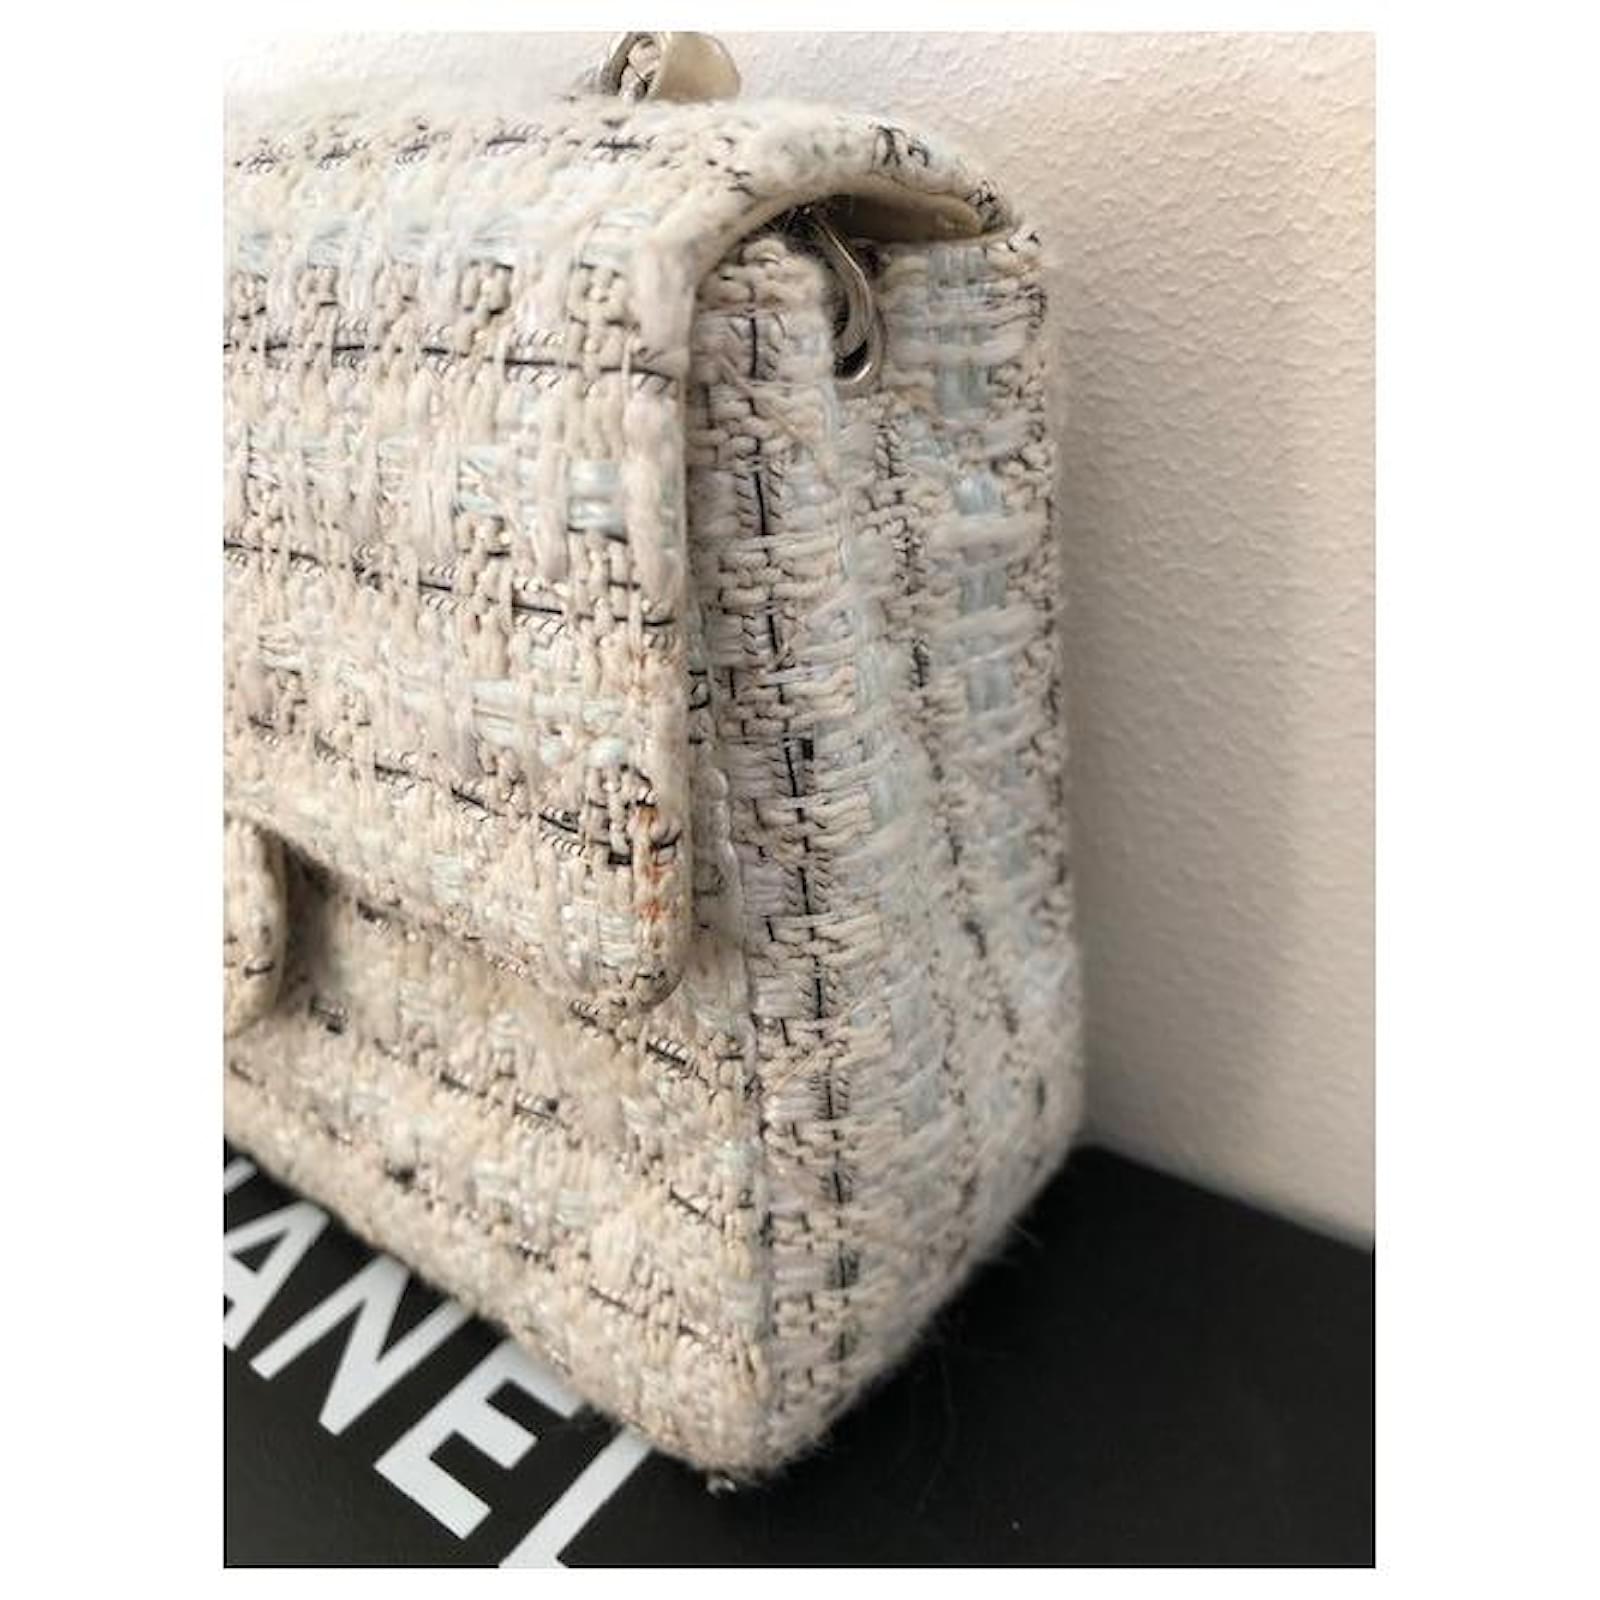 Chanel Classic Flap Bag Mini - Shop on Pinterest